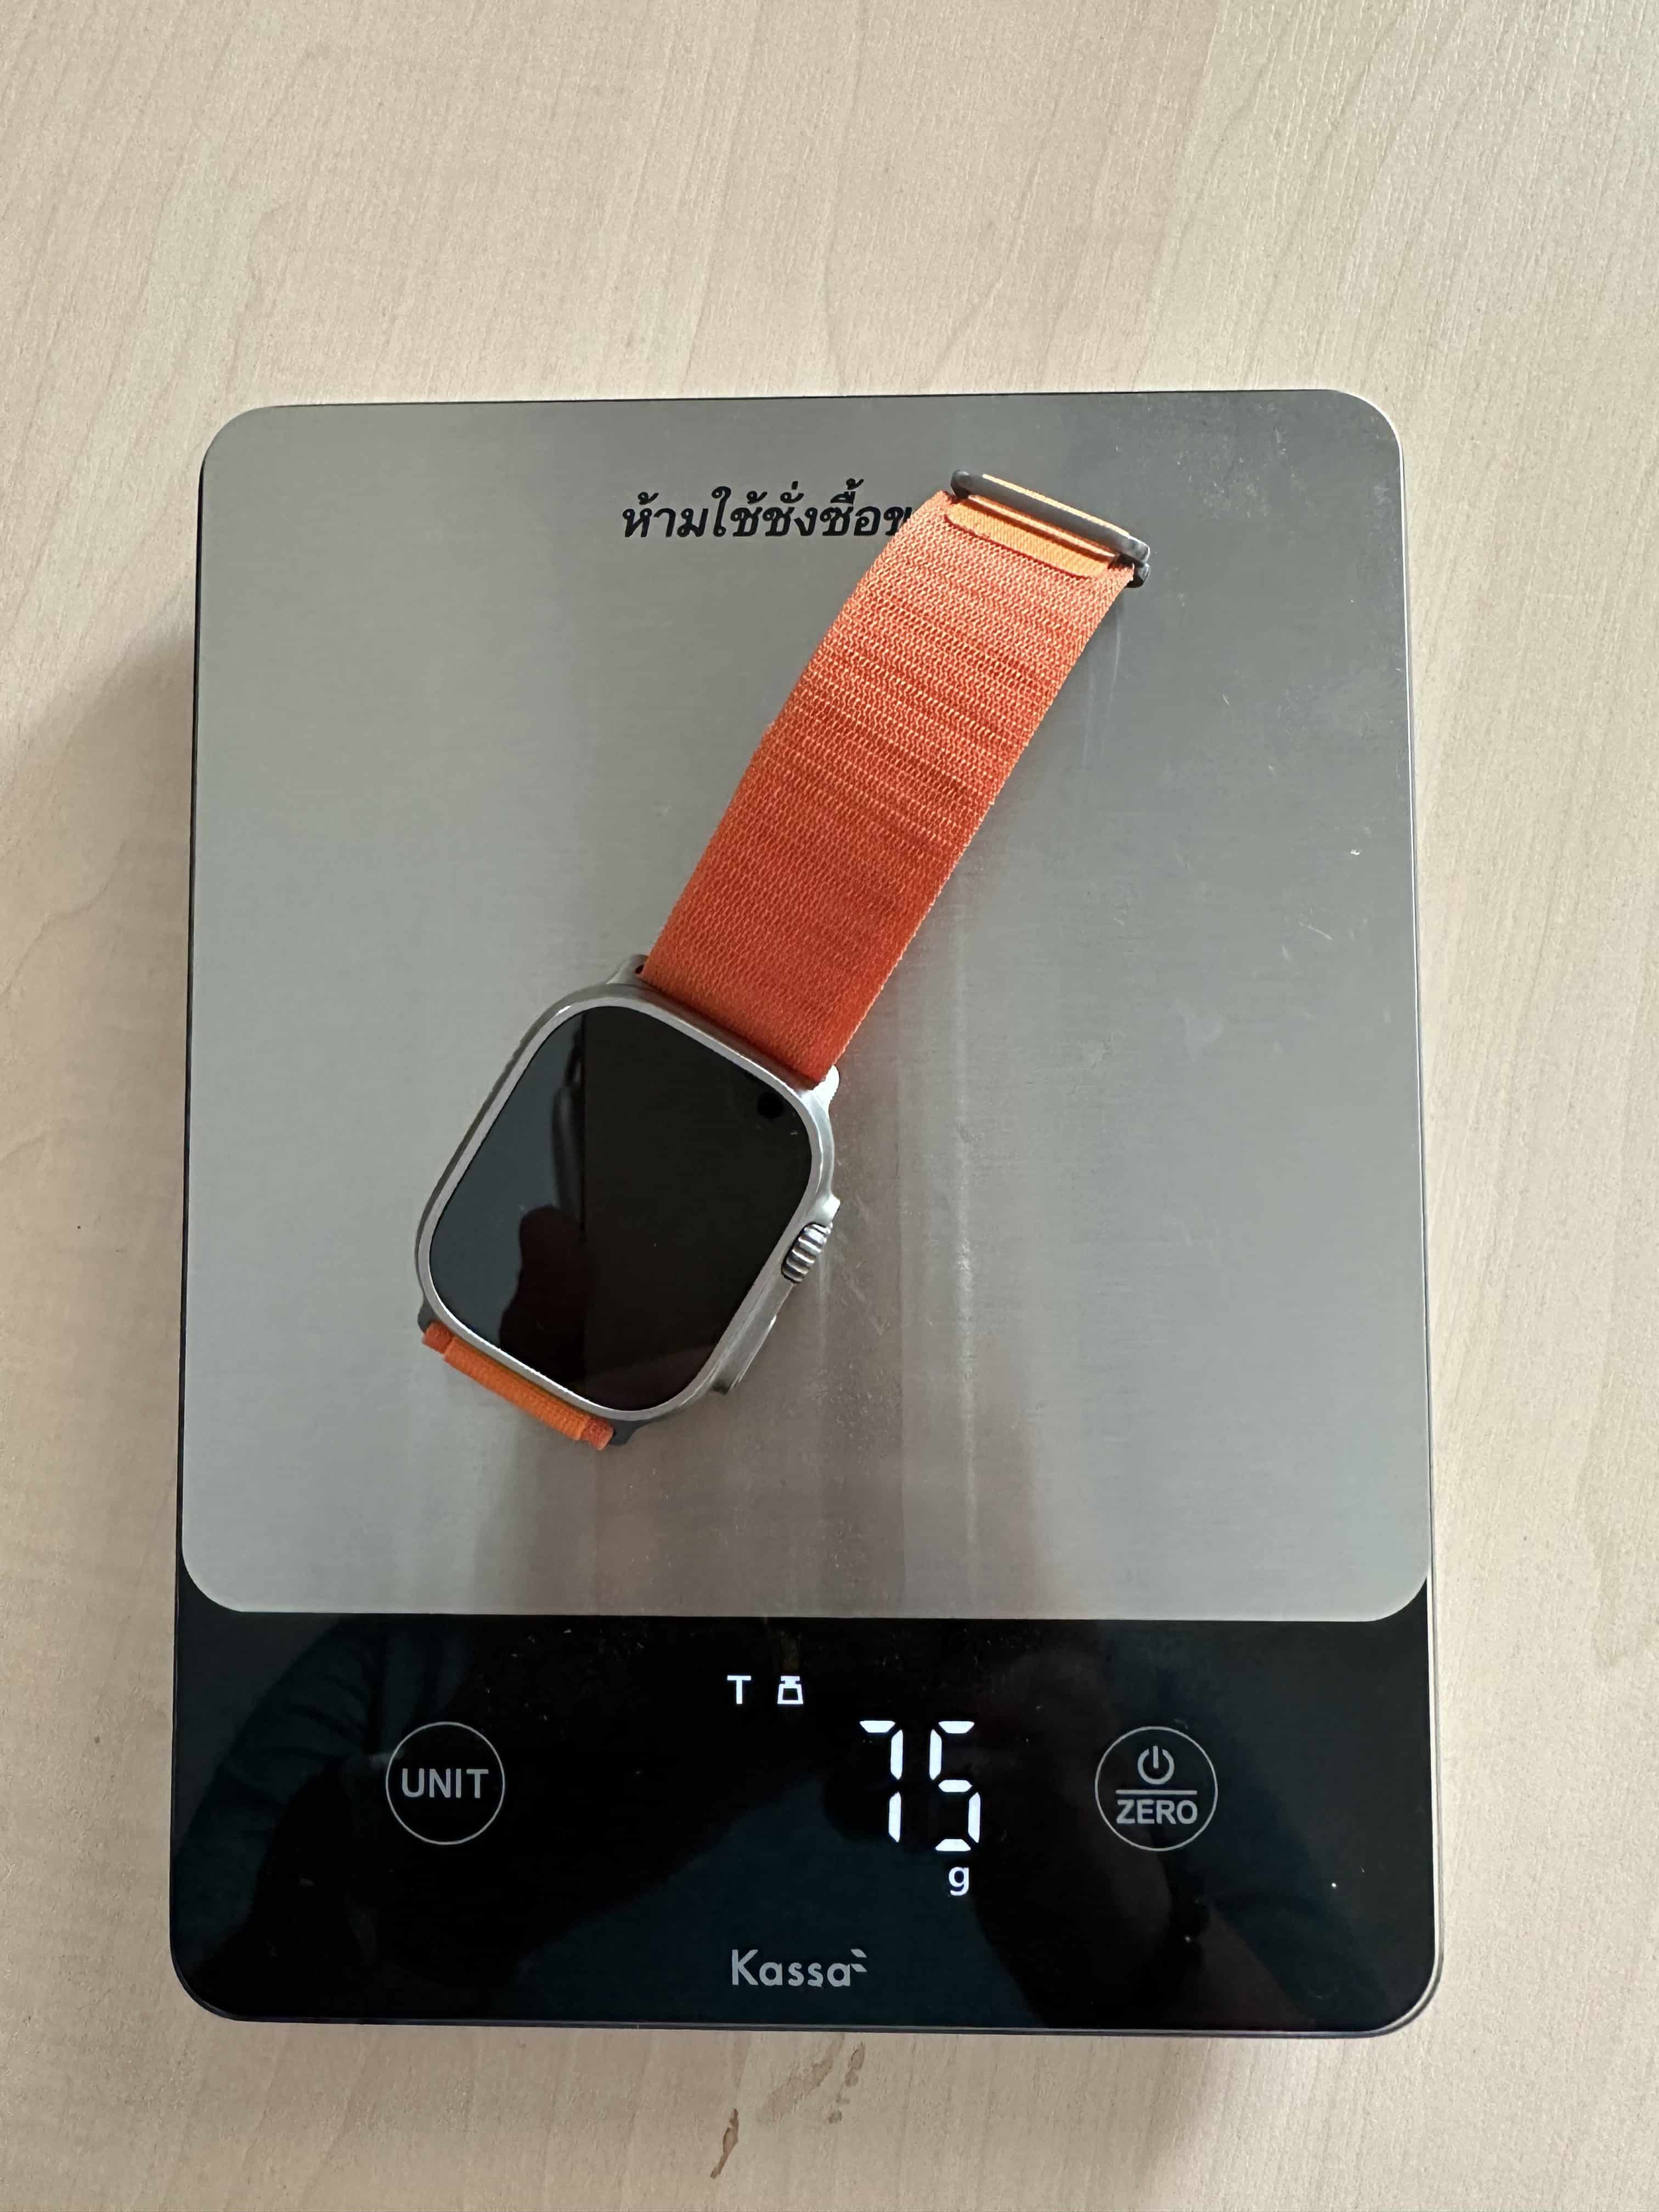 Cik sver Apple Watch Ultra?